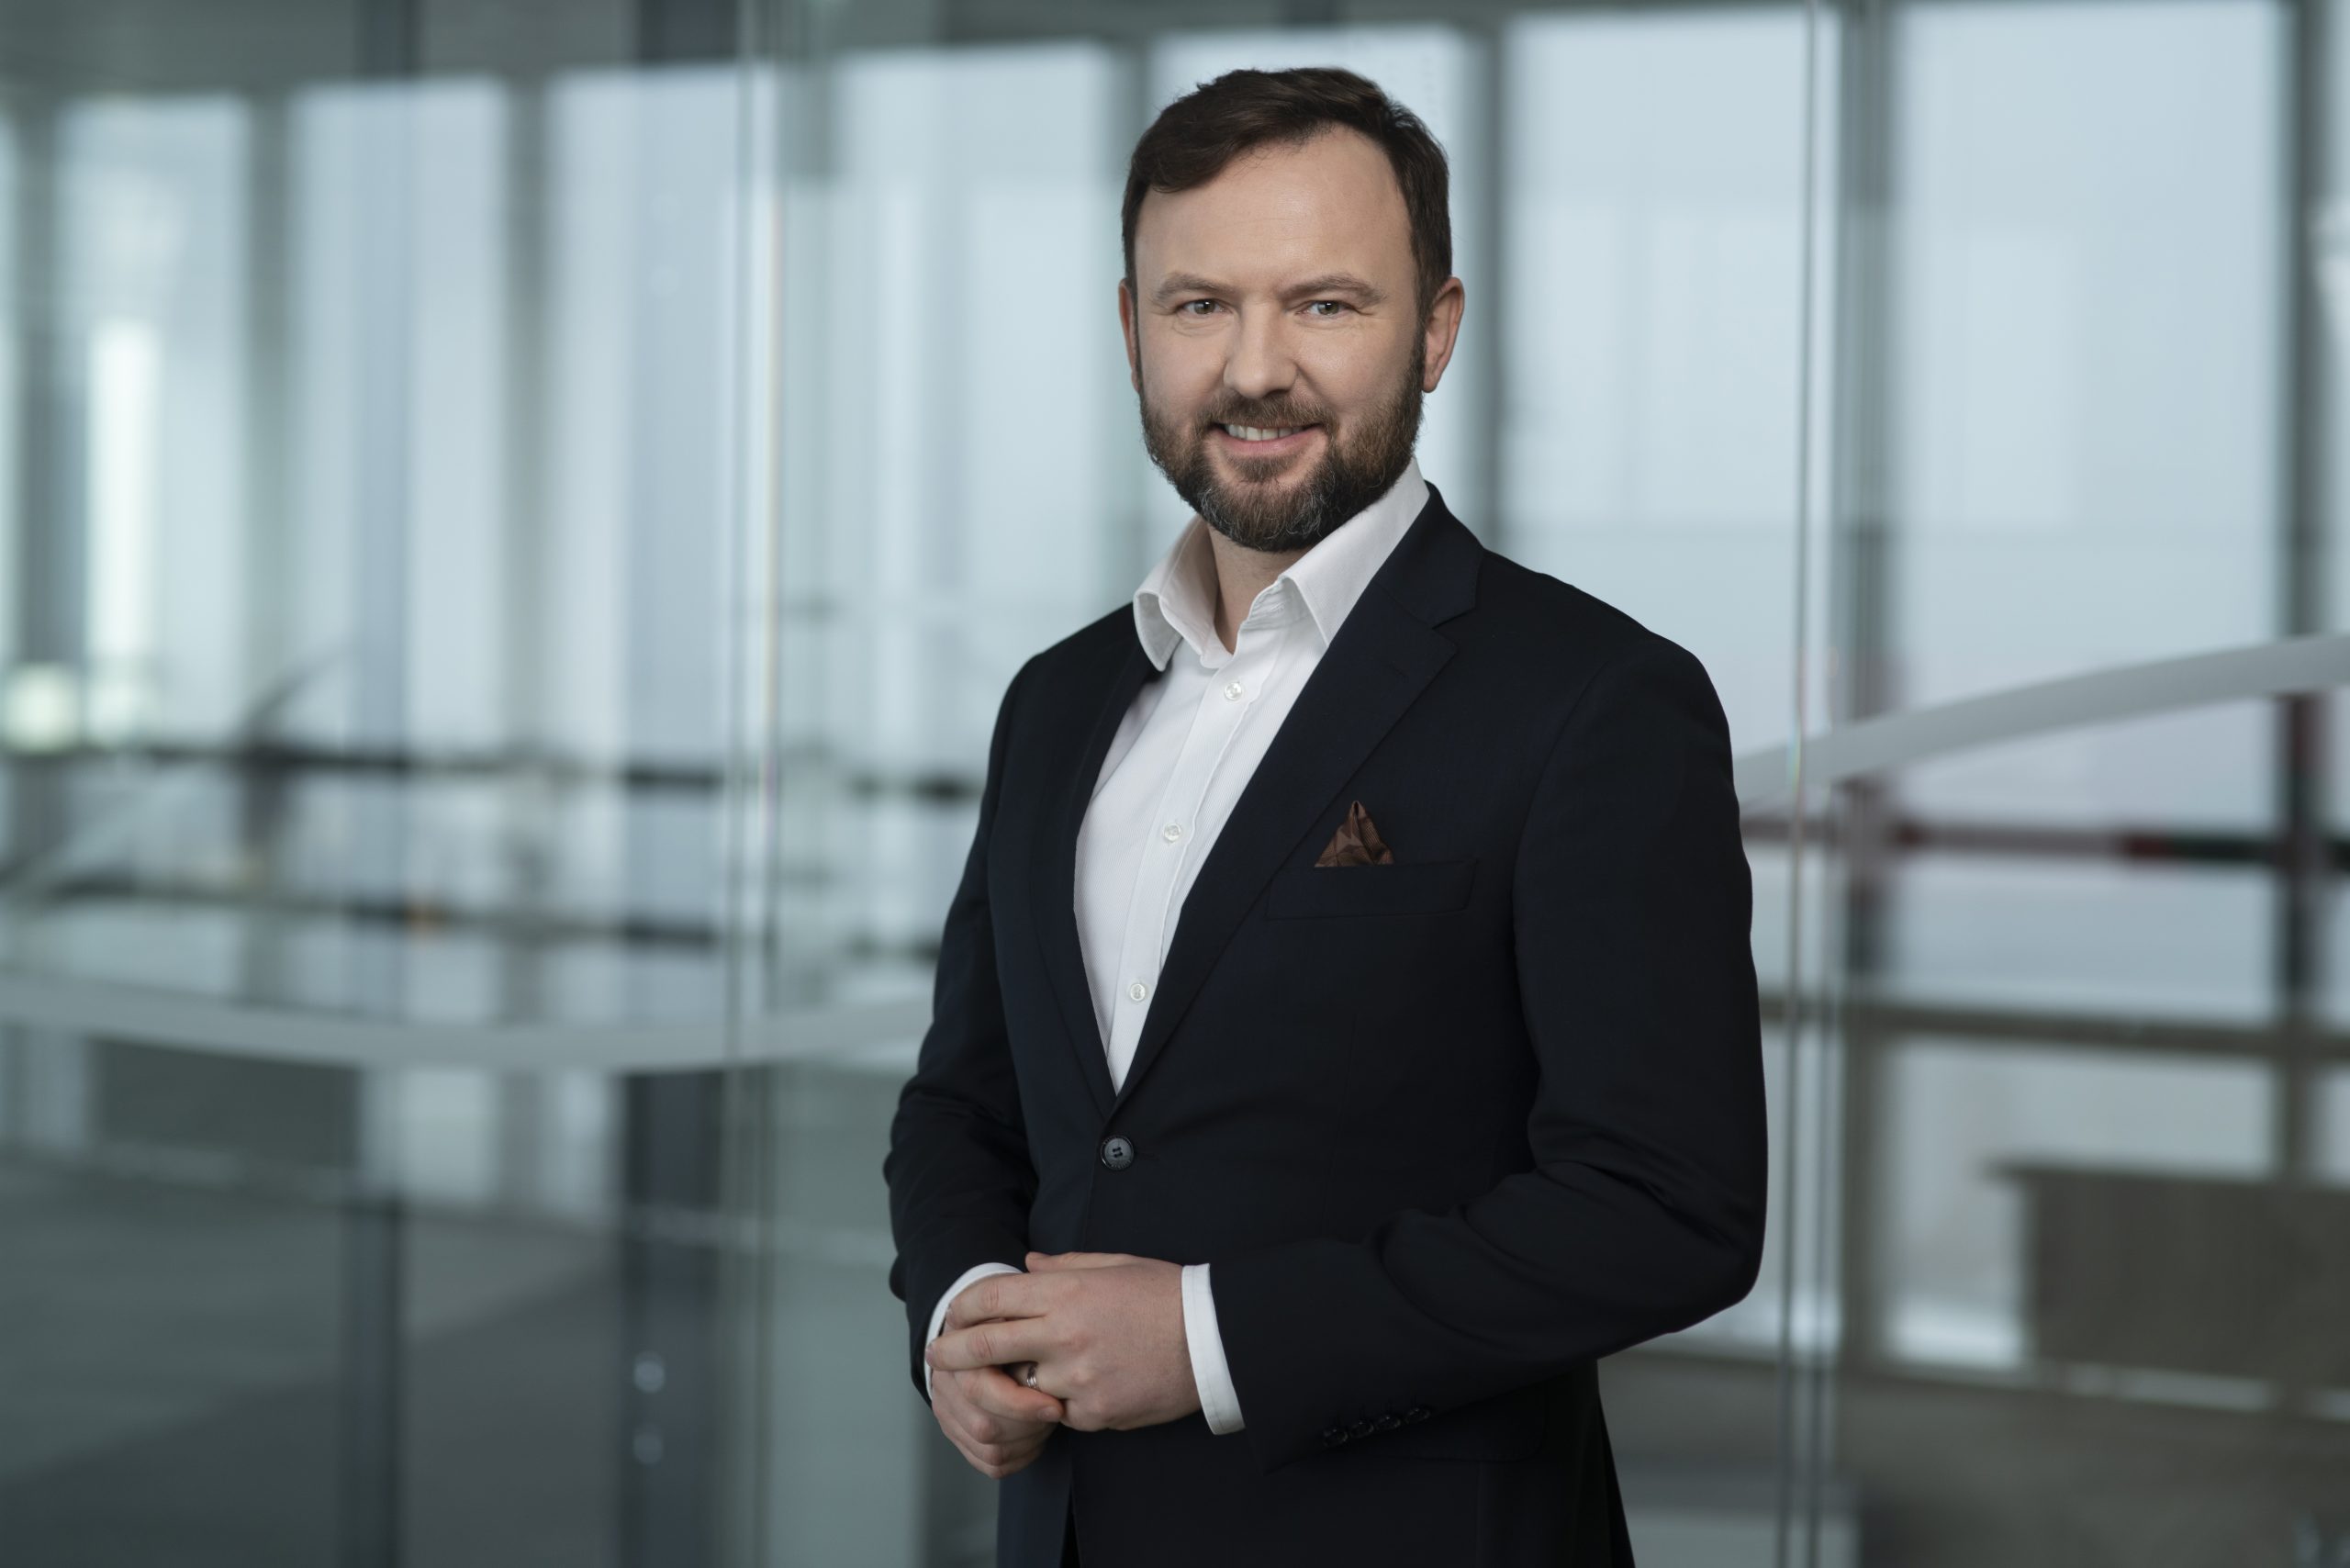 Challenging times – energy transition an opportunity for industry. Jacek Chodkowski, CEO of Dalkia Polska sp. z o.o., General director of Dalkia Polska Group